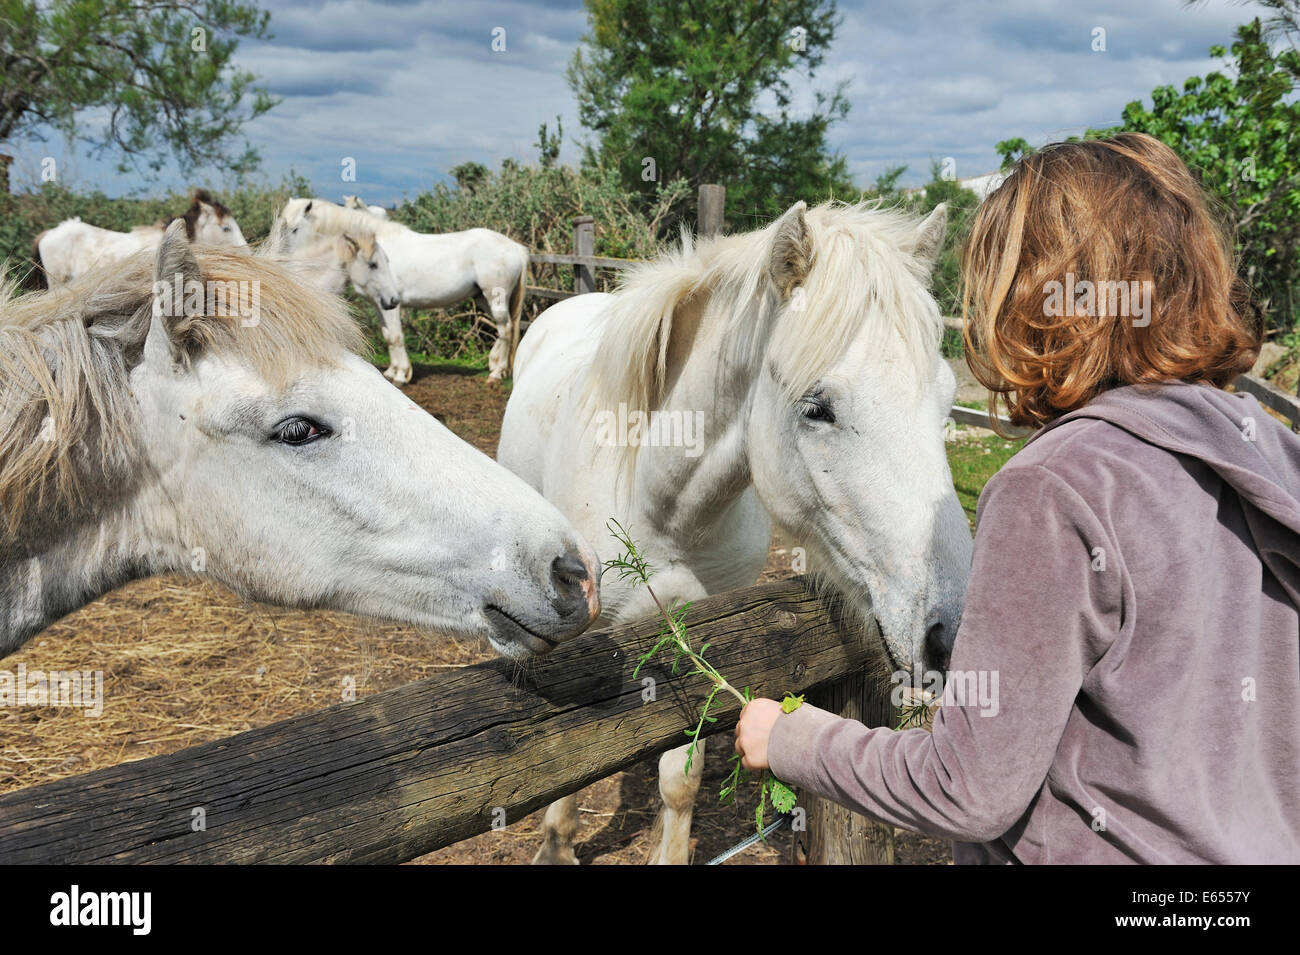 Alimentation fille chevaux camargue en paddock, Camargue, France, Europe Banque D'Images